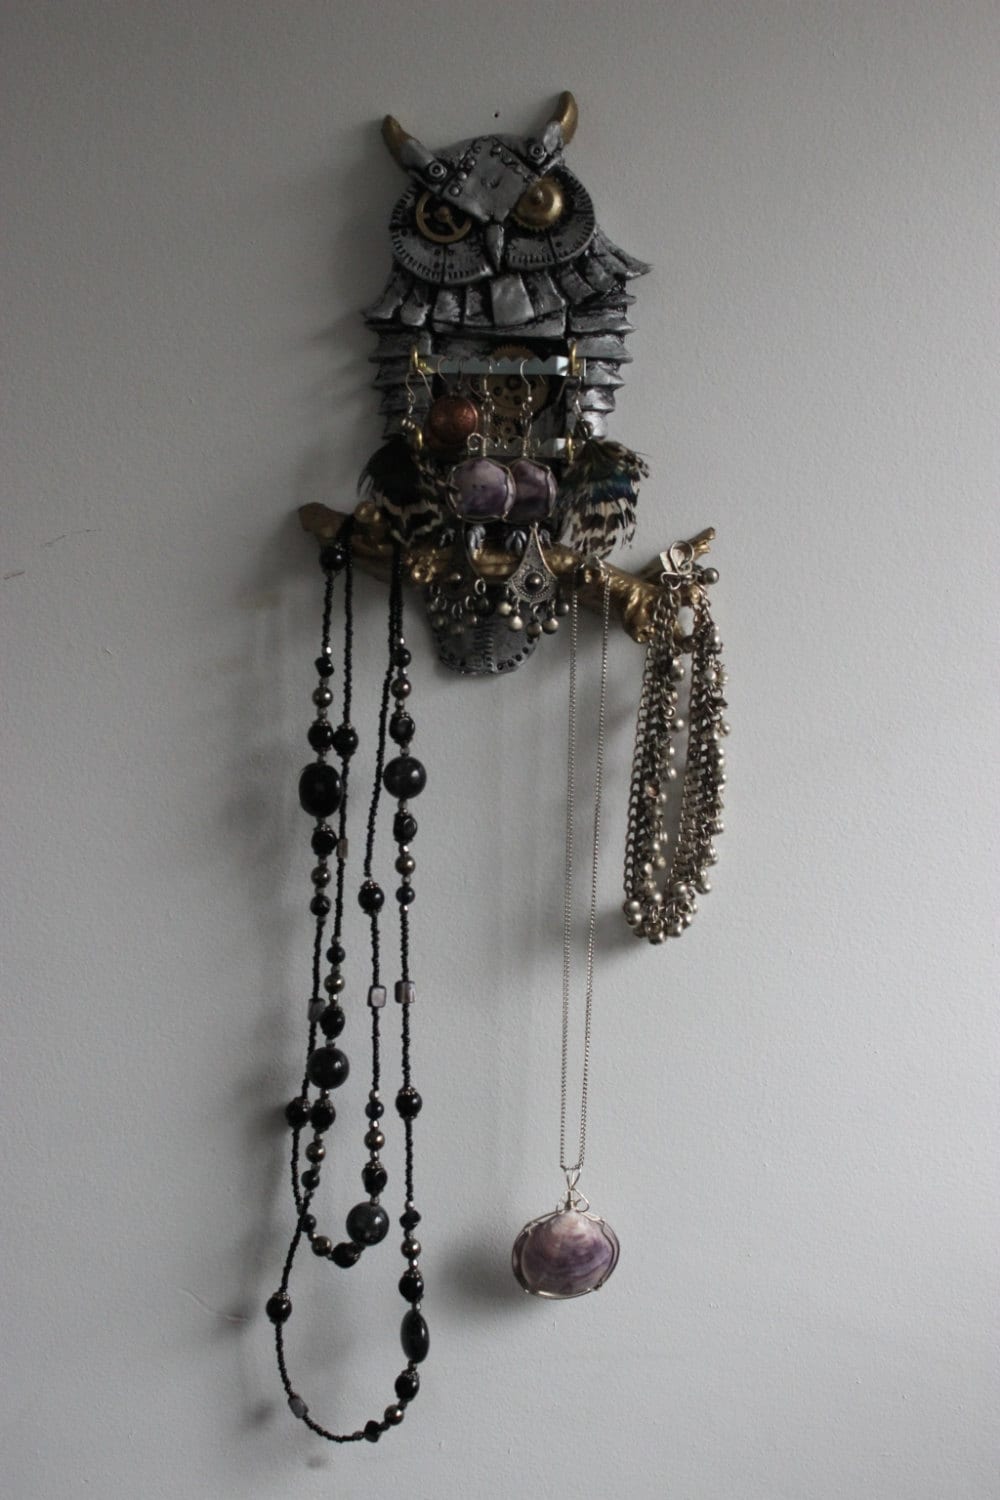 Steampunk Owl Jewellery, Storage & Organization. Wall Decor, Sculpture